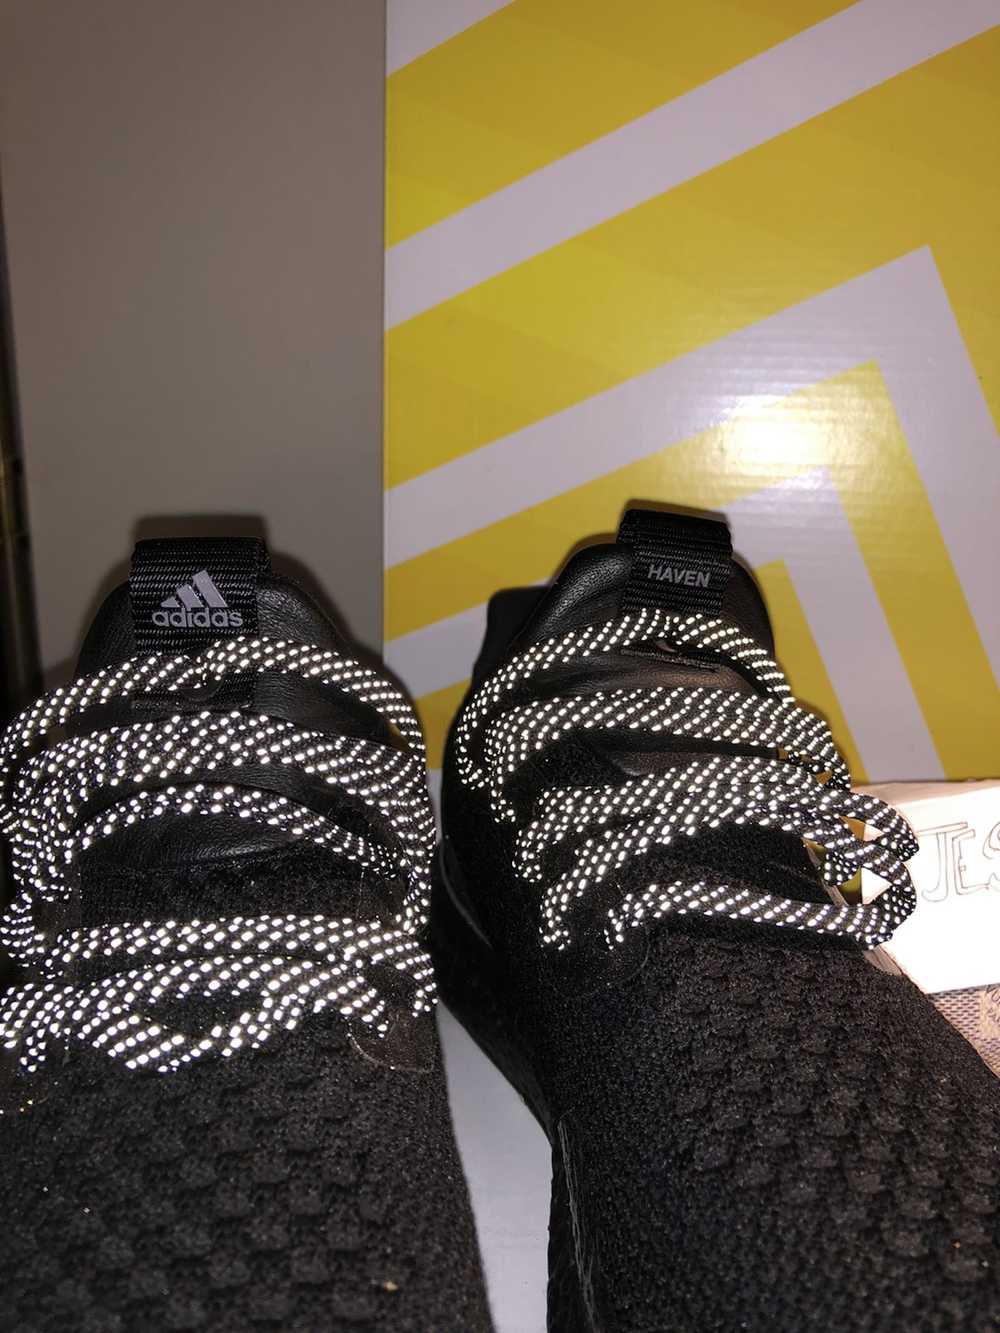 Adidas HAVEN x UltraBoost Uncaged Triple Black - image 3